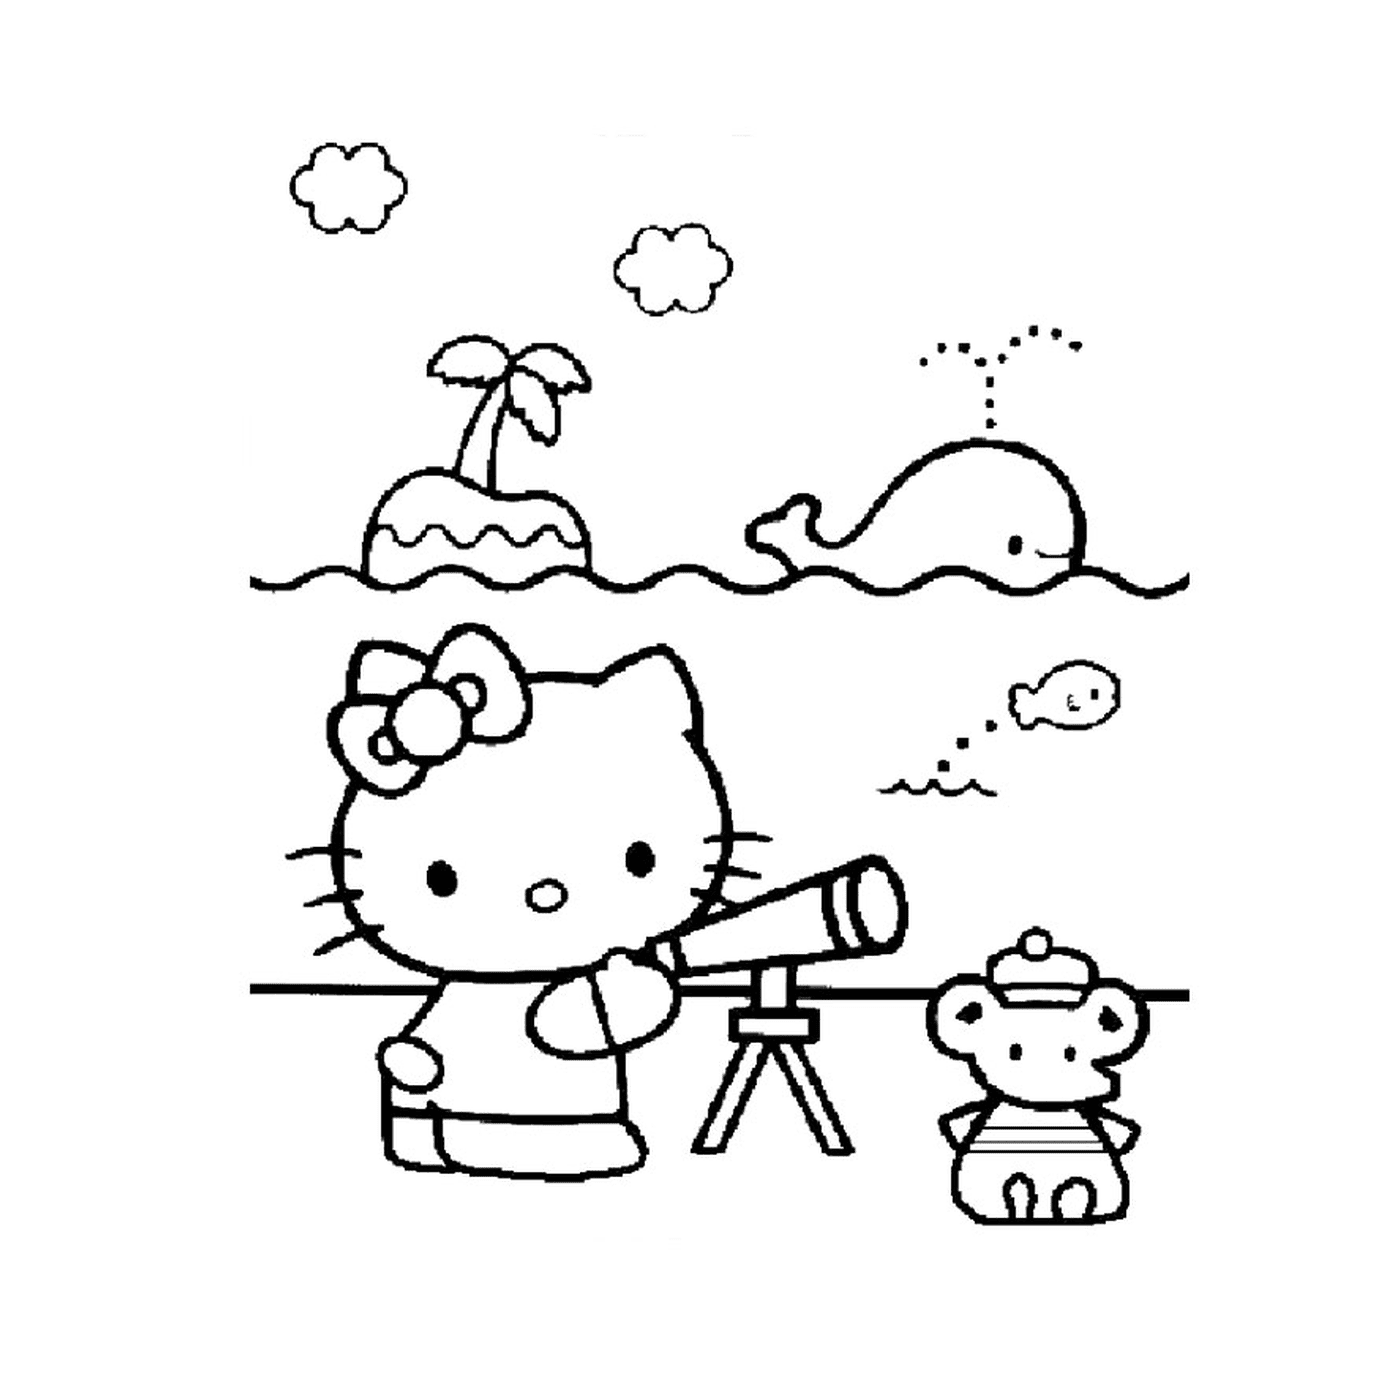  Palmier, Hello Kitty, telescope, teddy bear 